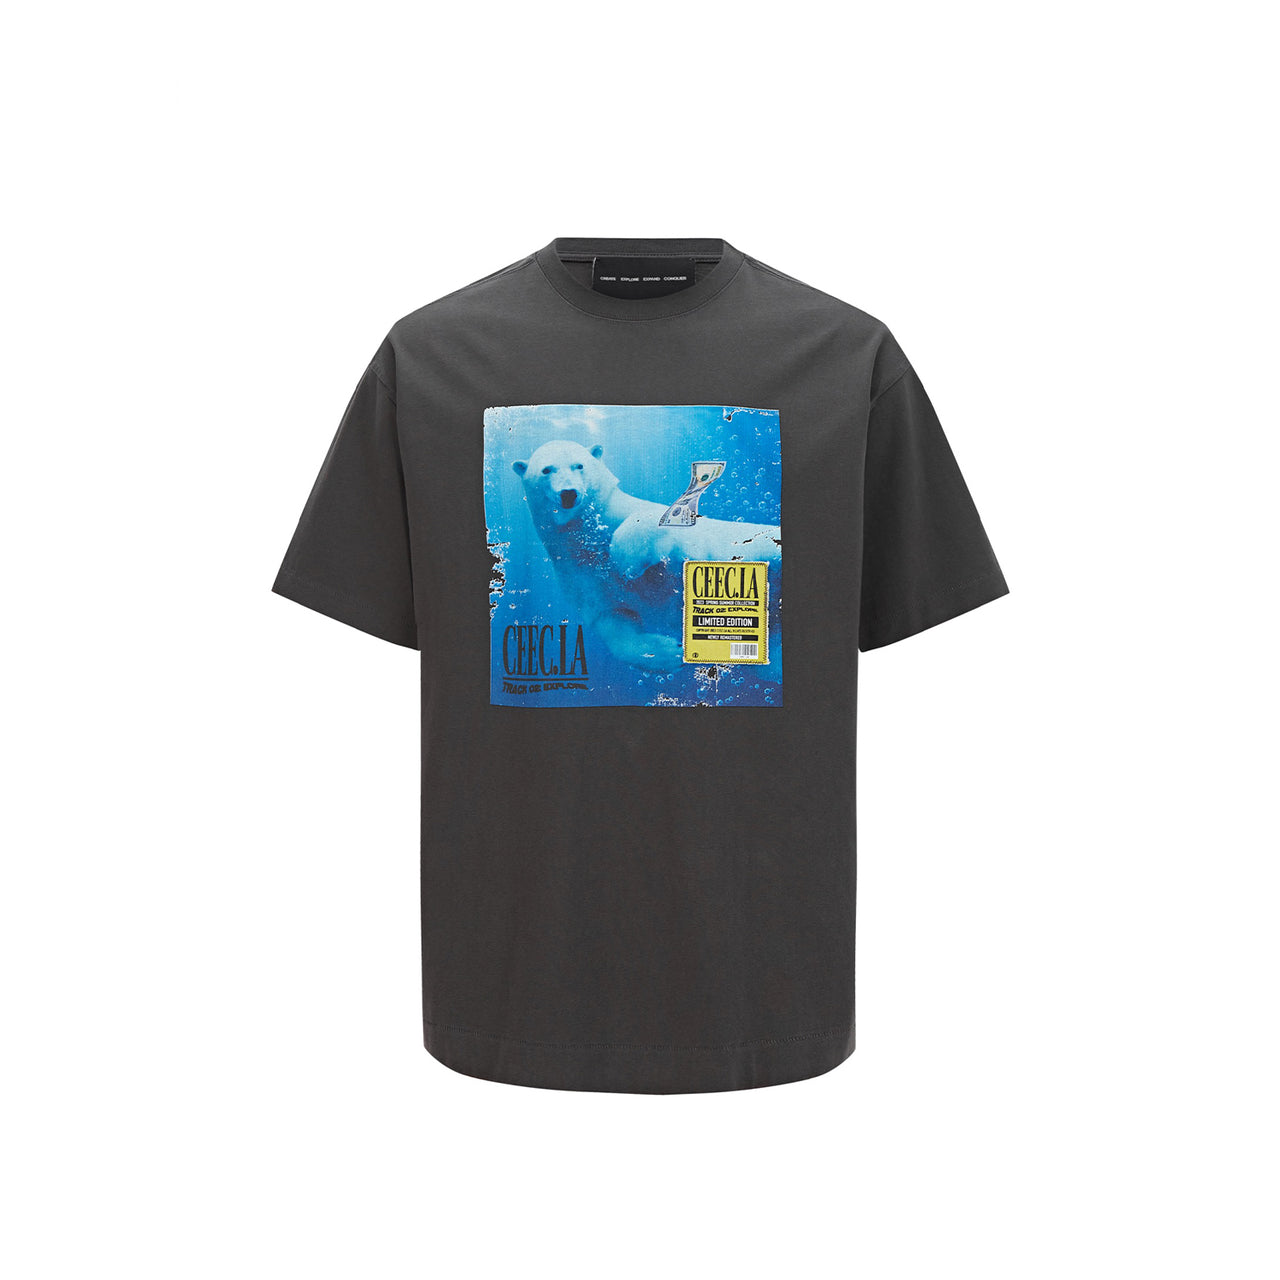 Nirvana Album Cover T-shirt in Black